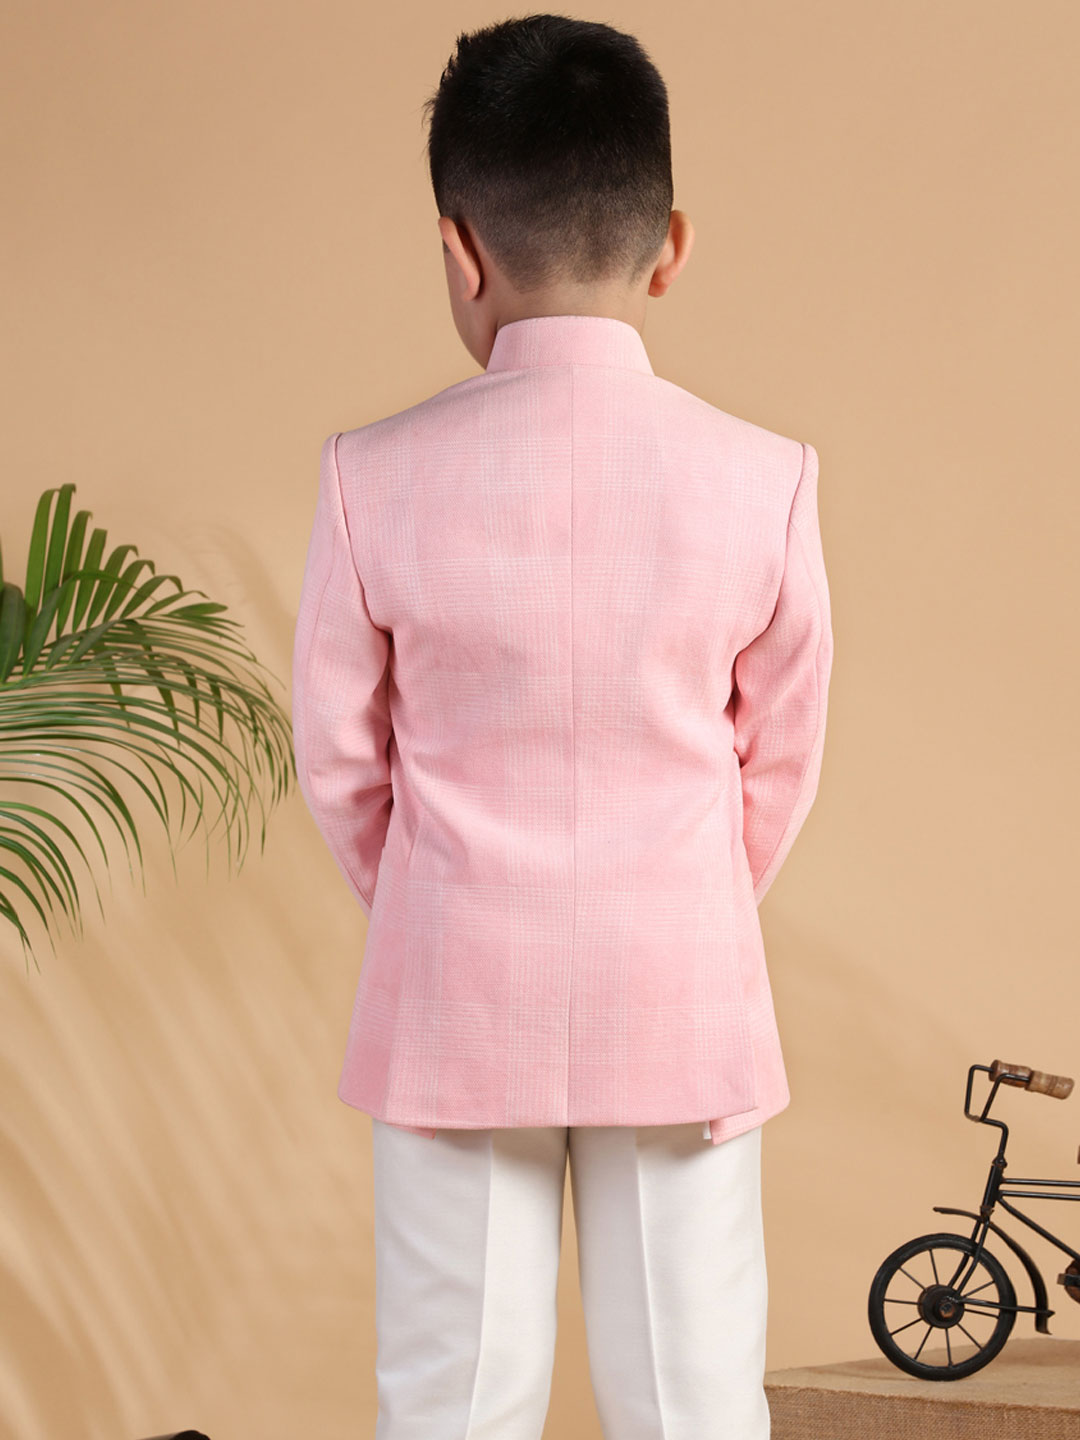 Men Suits Pink 3 Piece Slim Fit Formal Fashion Wedding Suit Party Wear  Dinner Suit Bespoke for Men - Etsy | Pink suit men, Blue suit men, Wedding  suit styles